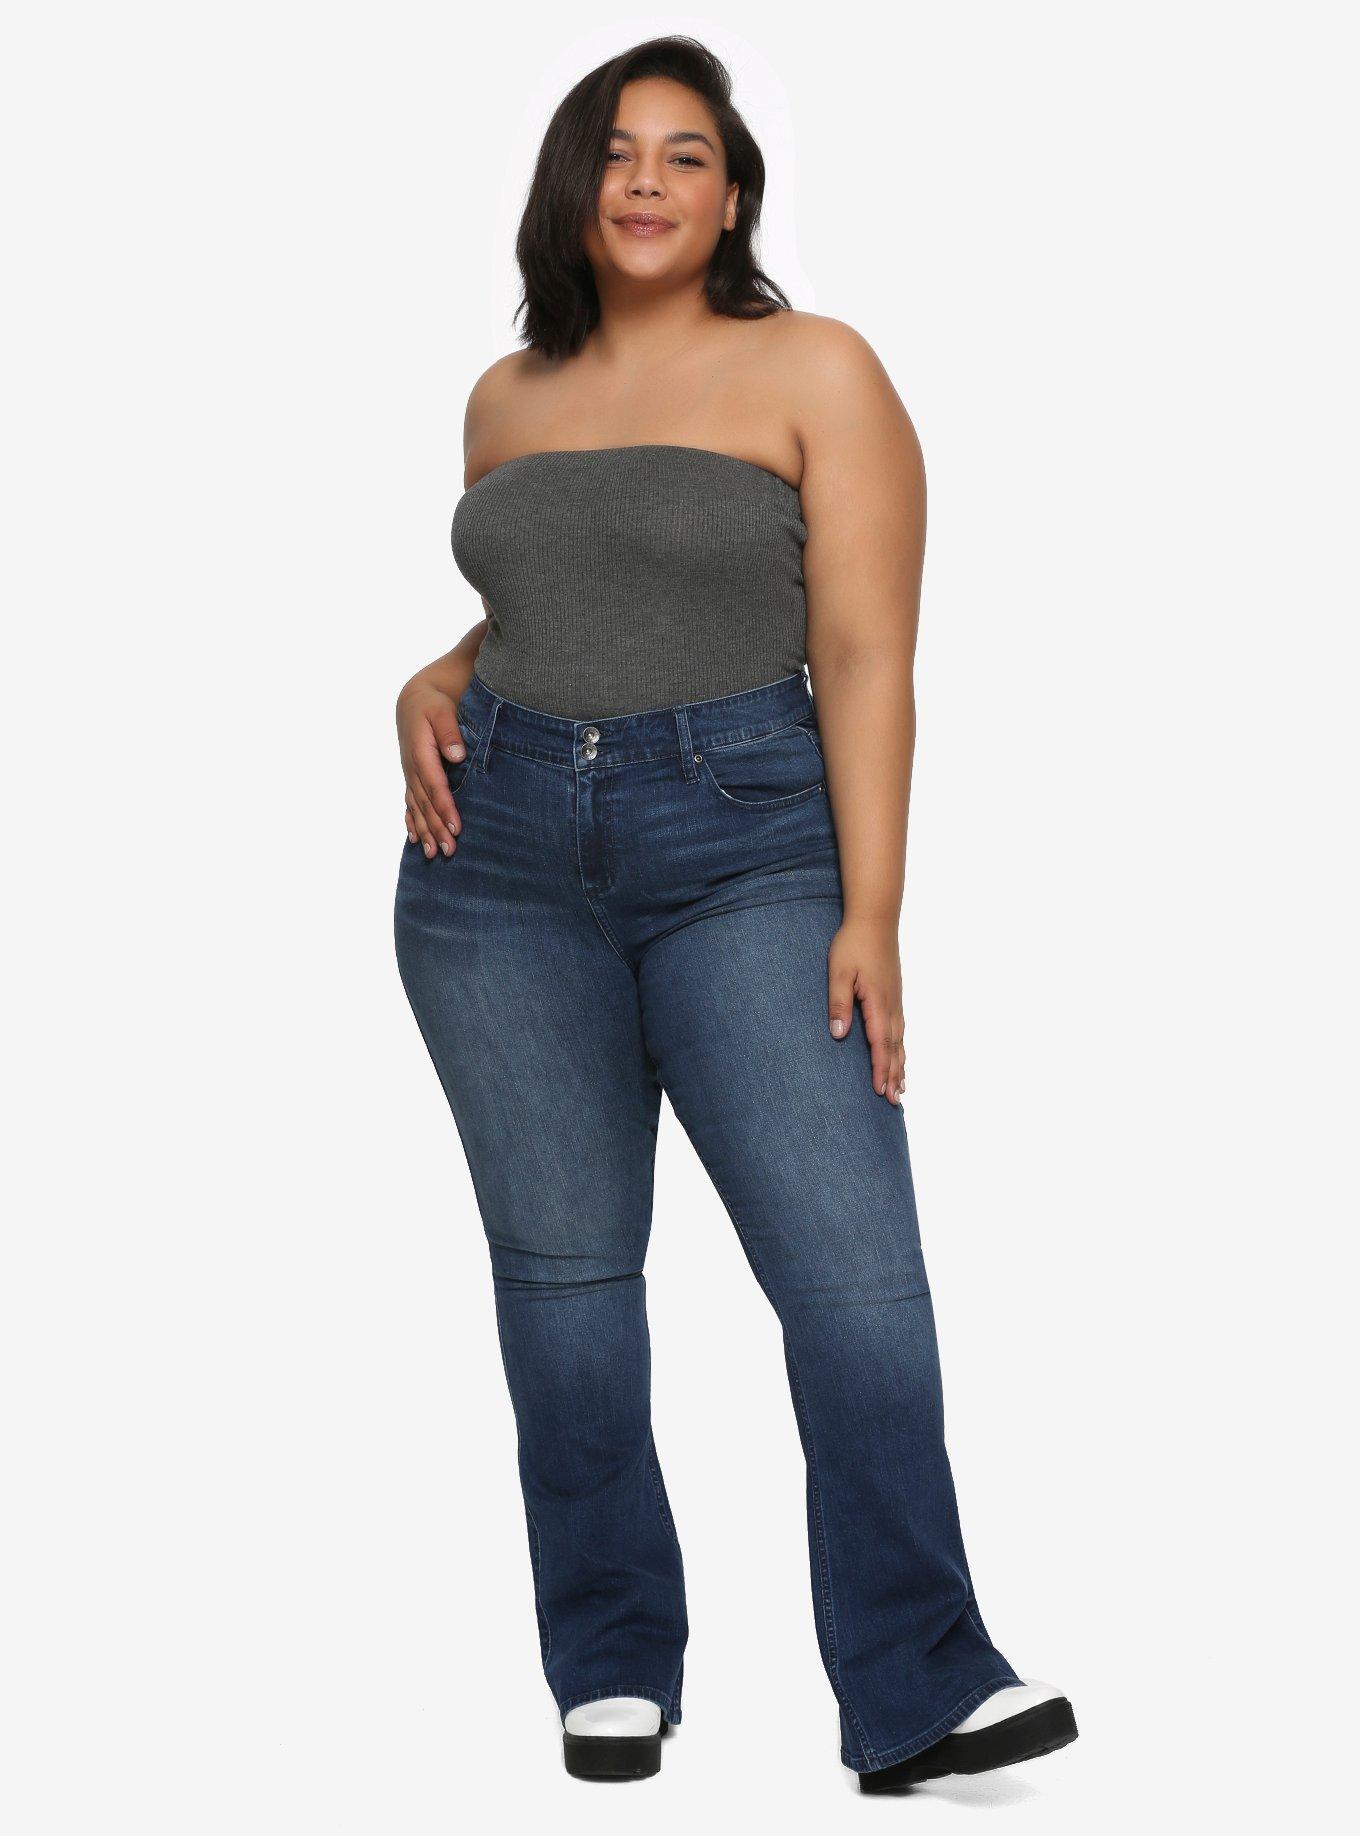 HT Denim Indigo Hi-Rise Flared Jeans Plus Size, INDIGO, alternate